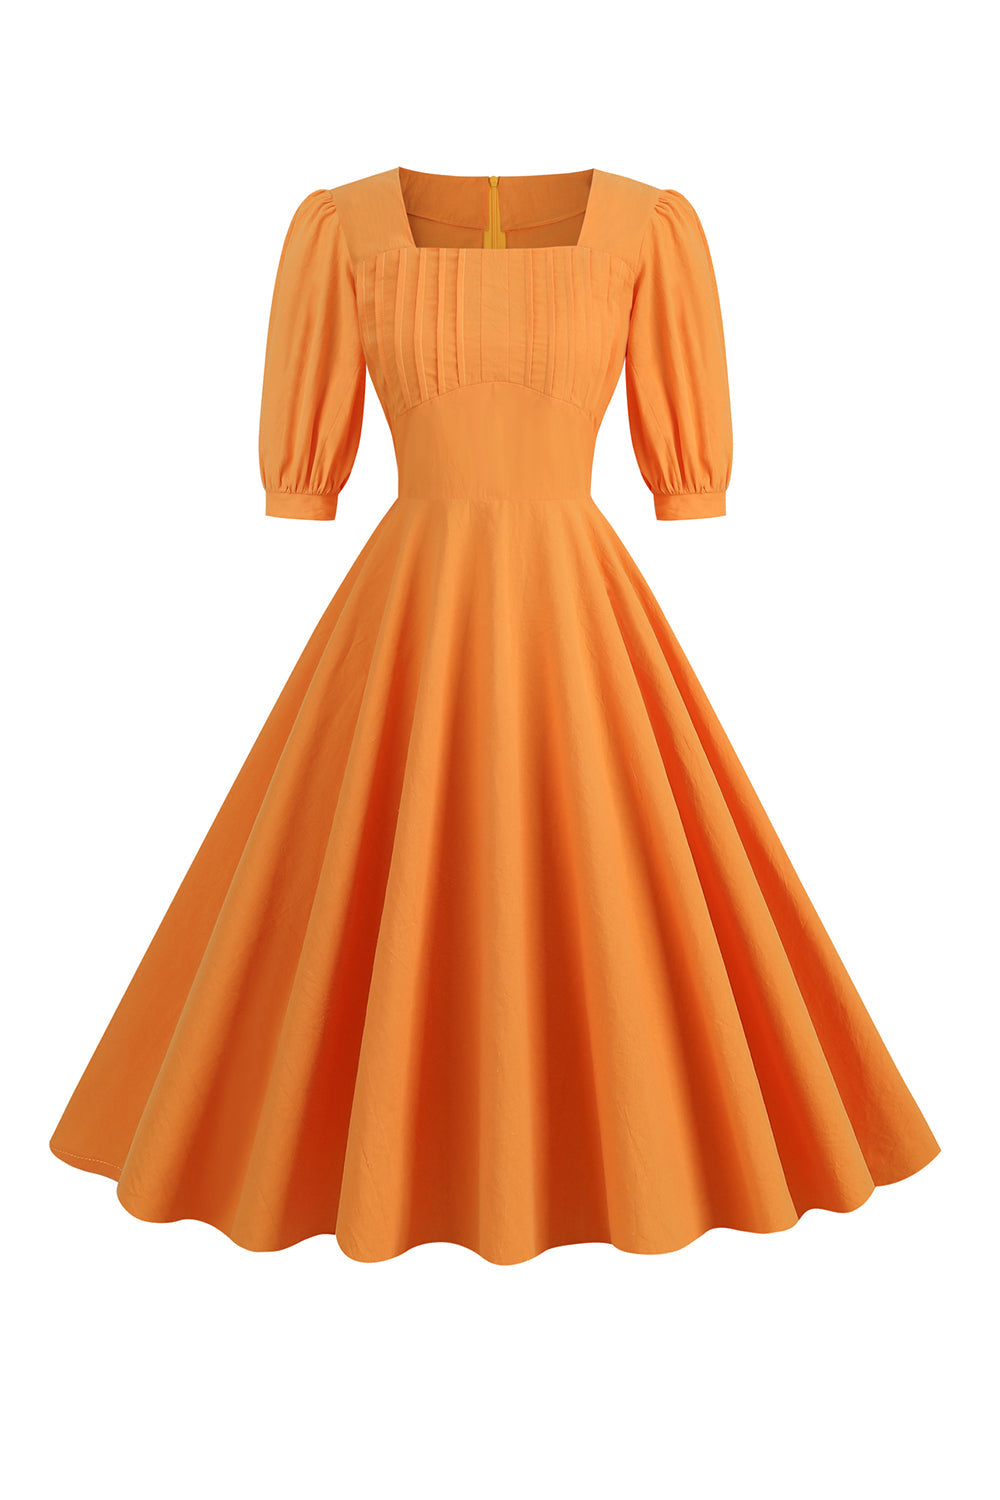 Orange Half Sleeves Square Neck 1950s Dress